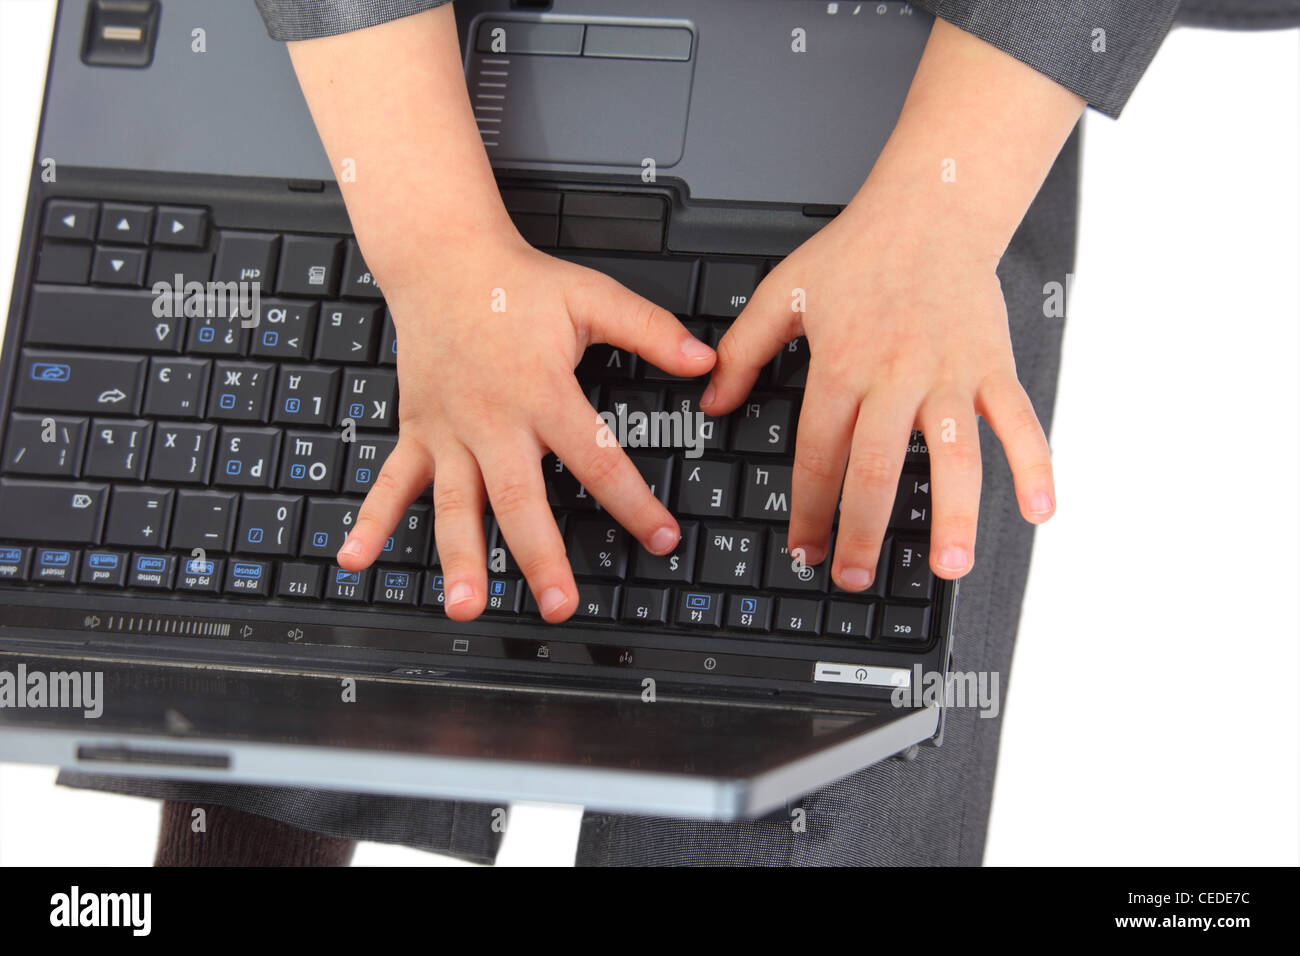 childish Hands on laptpop`s keyboard Stock Photo